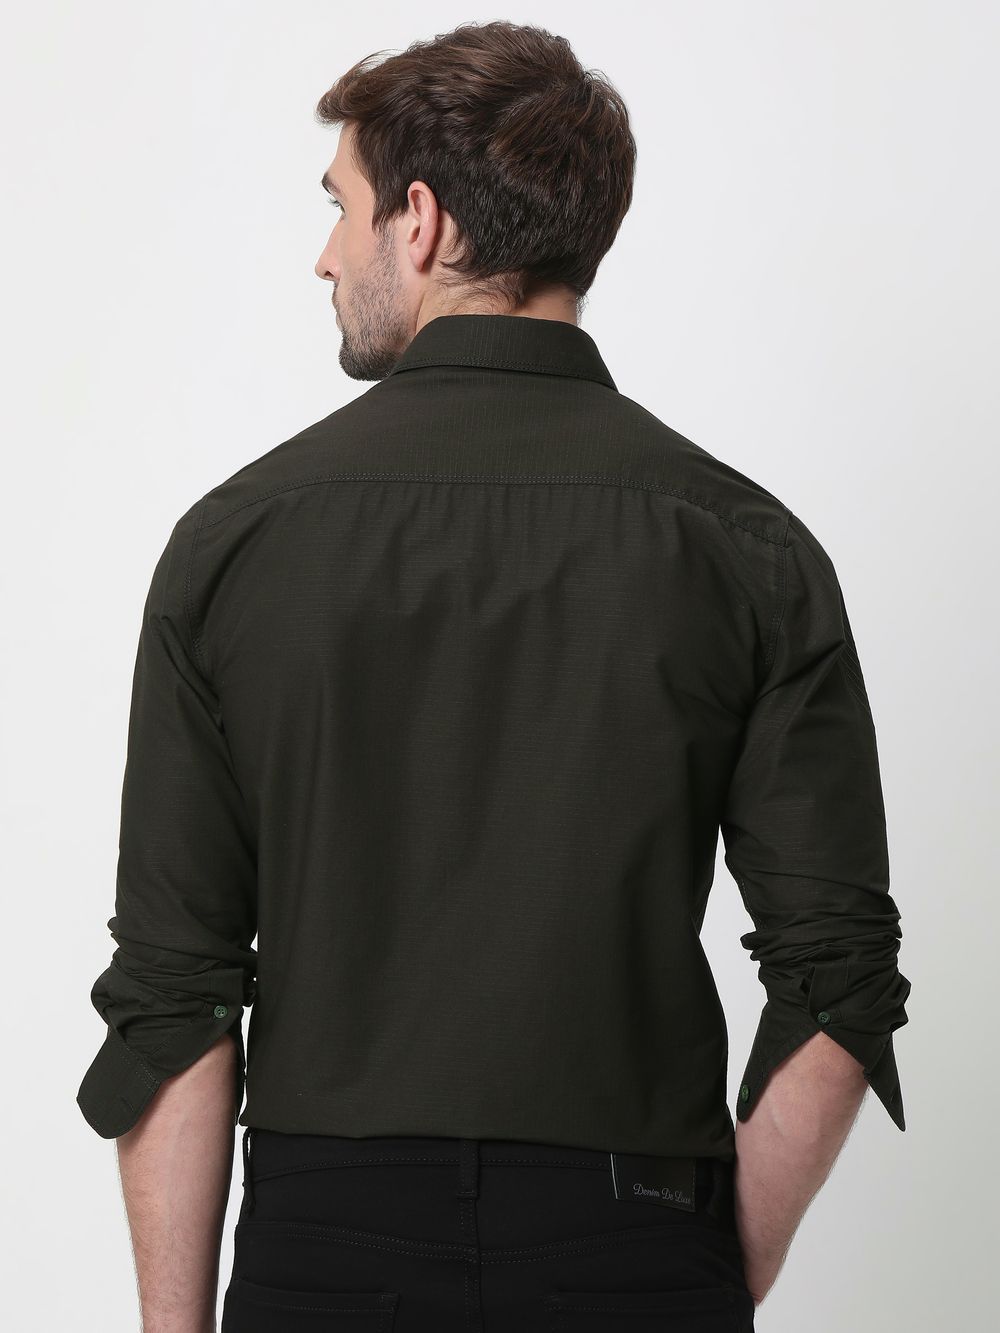 Olive Military Plain Slim Fit Casual Shirt